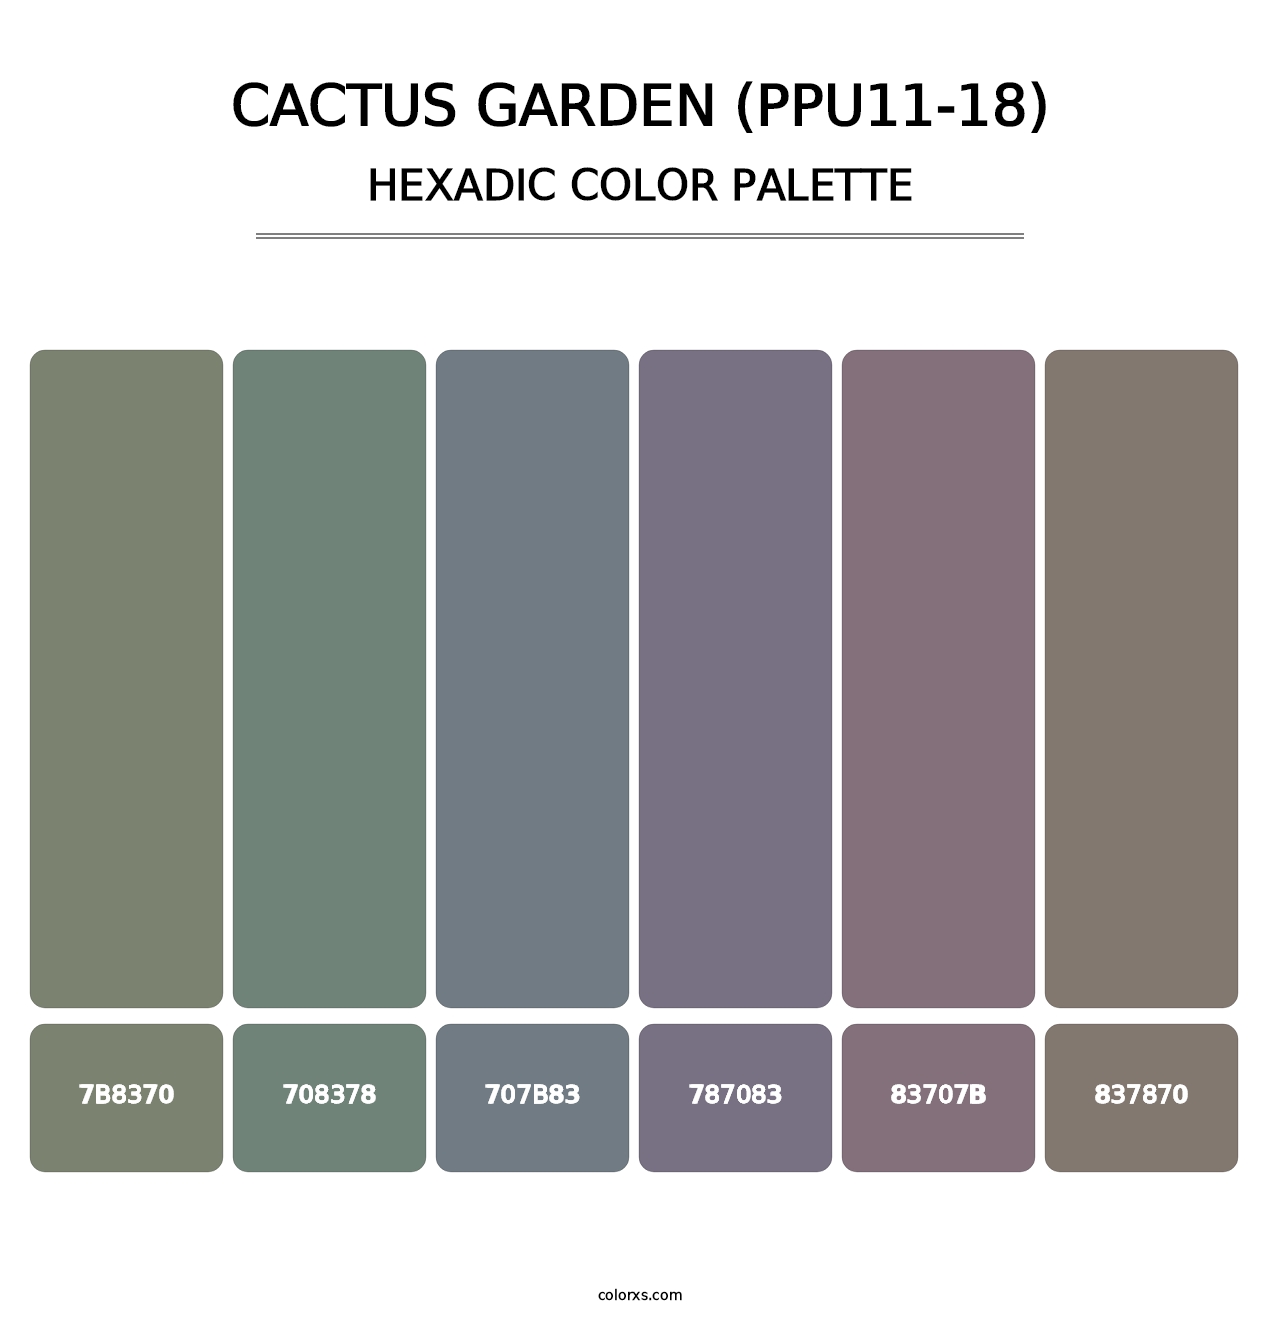 Cactus Garden (PPU11-18) - Hexadic Color Palette